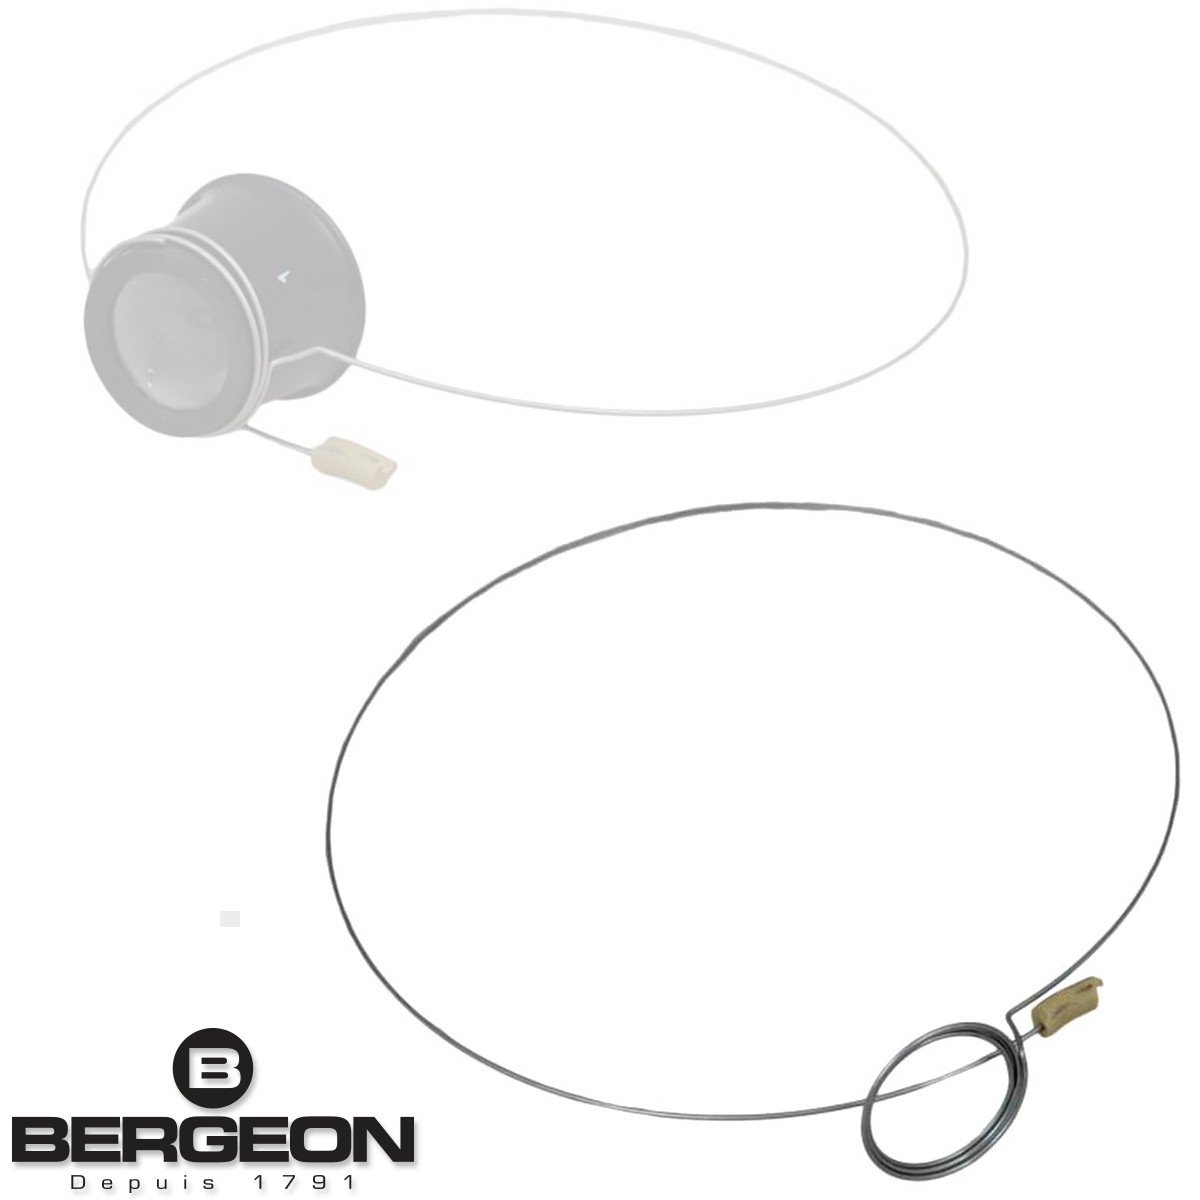 BERGEON 5461 Watchmakers Jewellers Eyeglass holder Head Band 